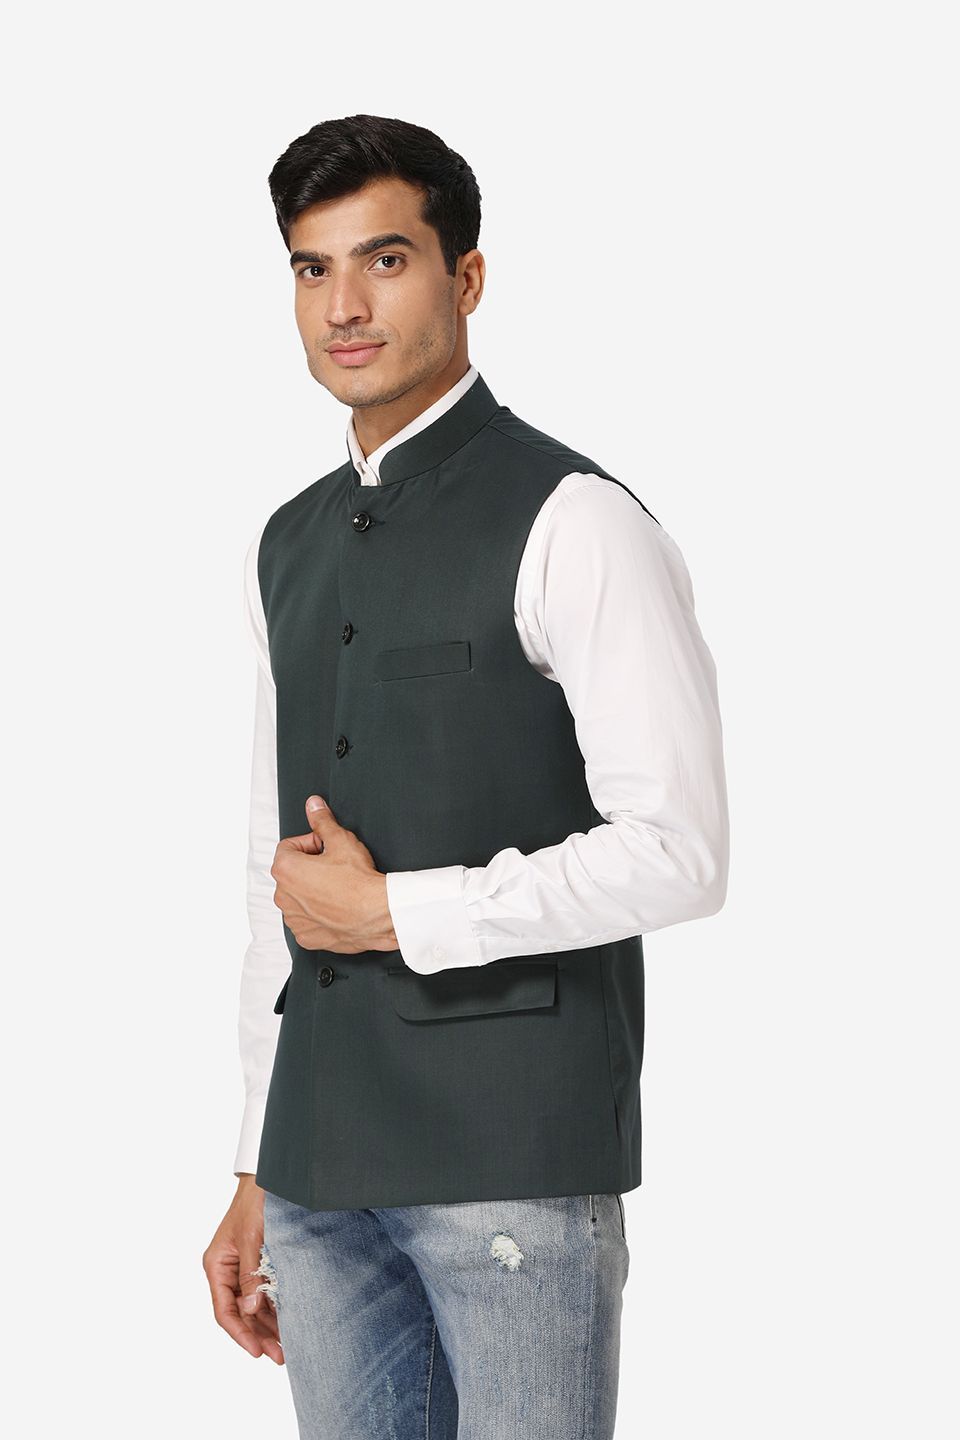 WINTAGE Men's Poly Cotton Festive and Casual Nehru Jacket Vest Waistcoat : Dark Green